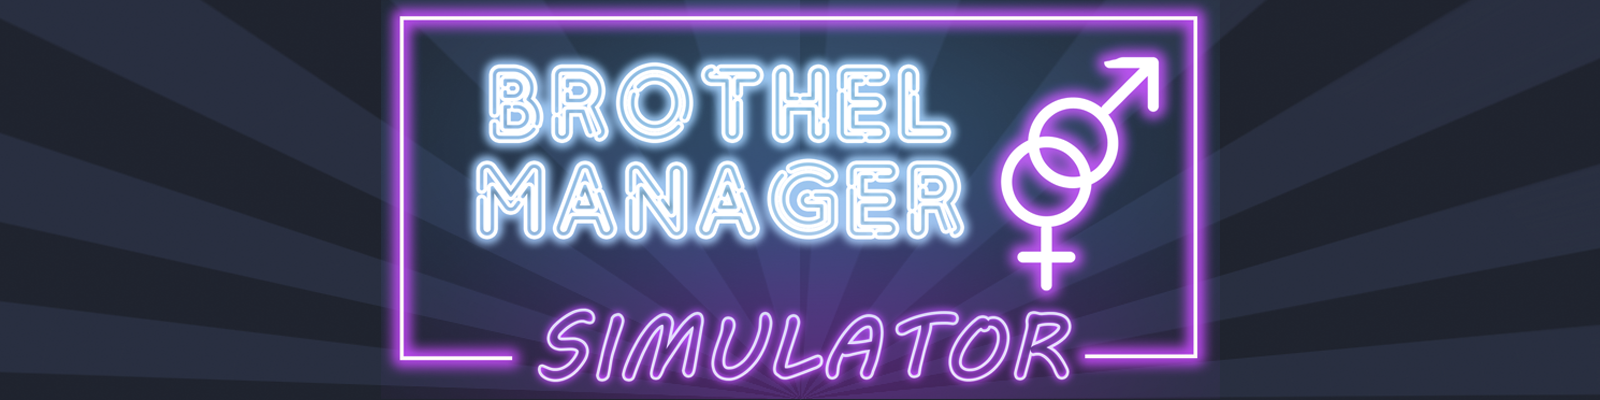 Brothel Manager Simulator poster